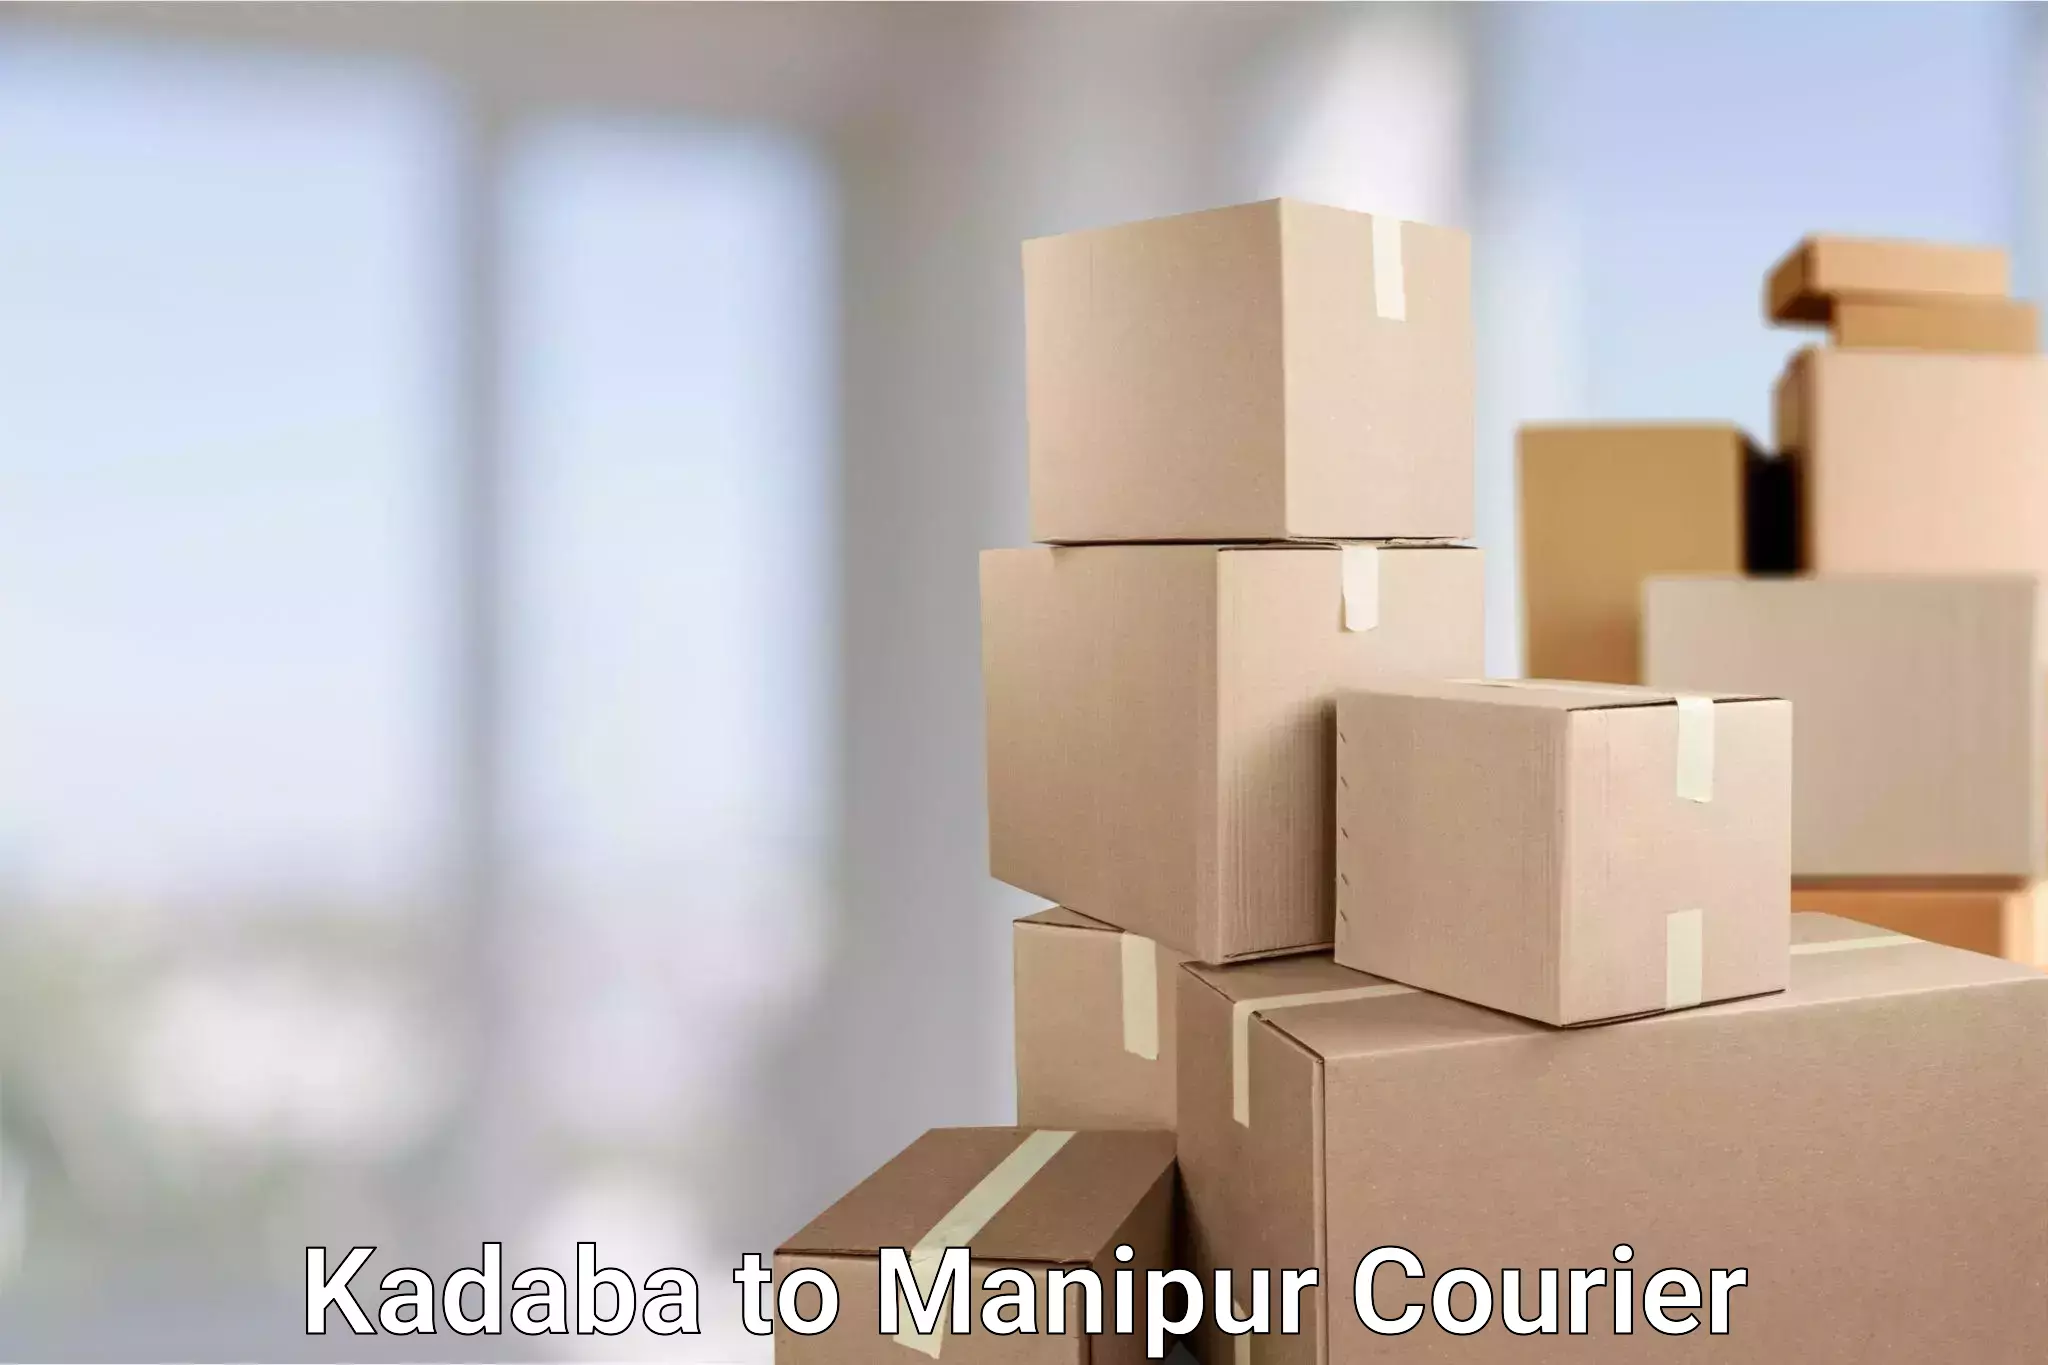 Courier service comparison in Kadaba to Kanti